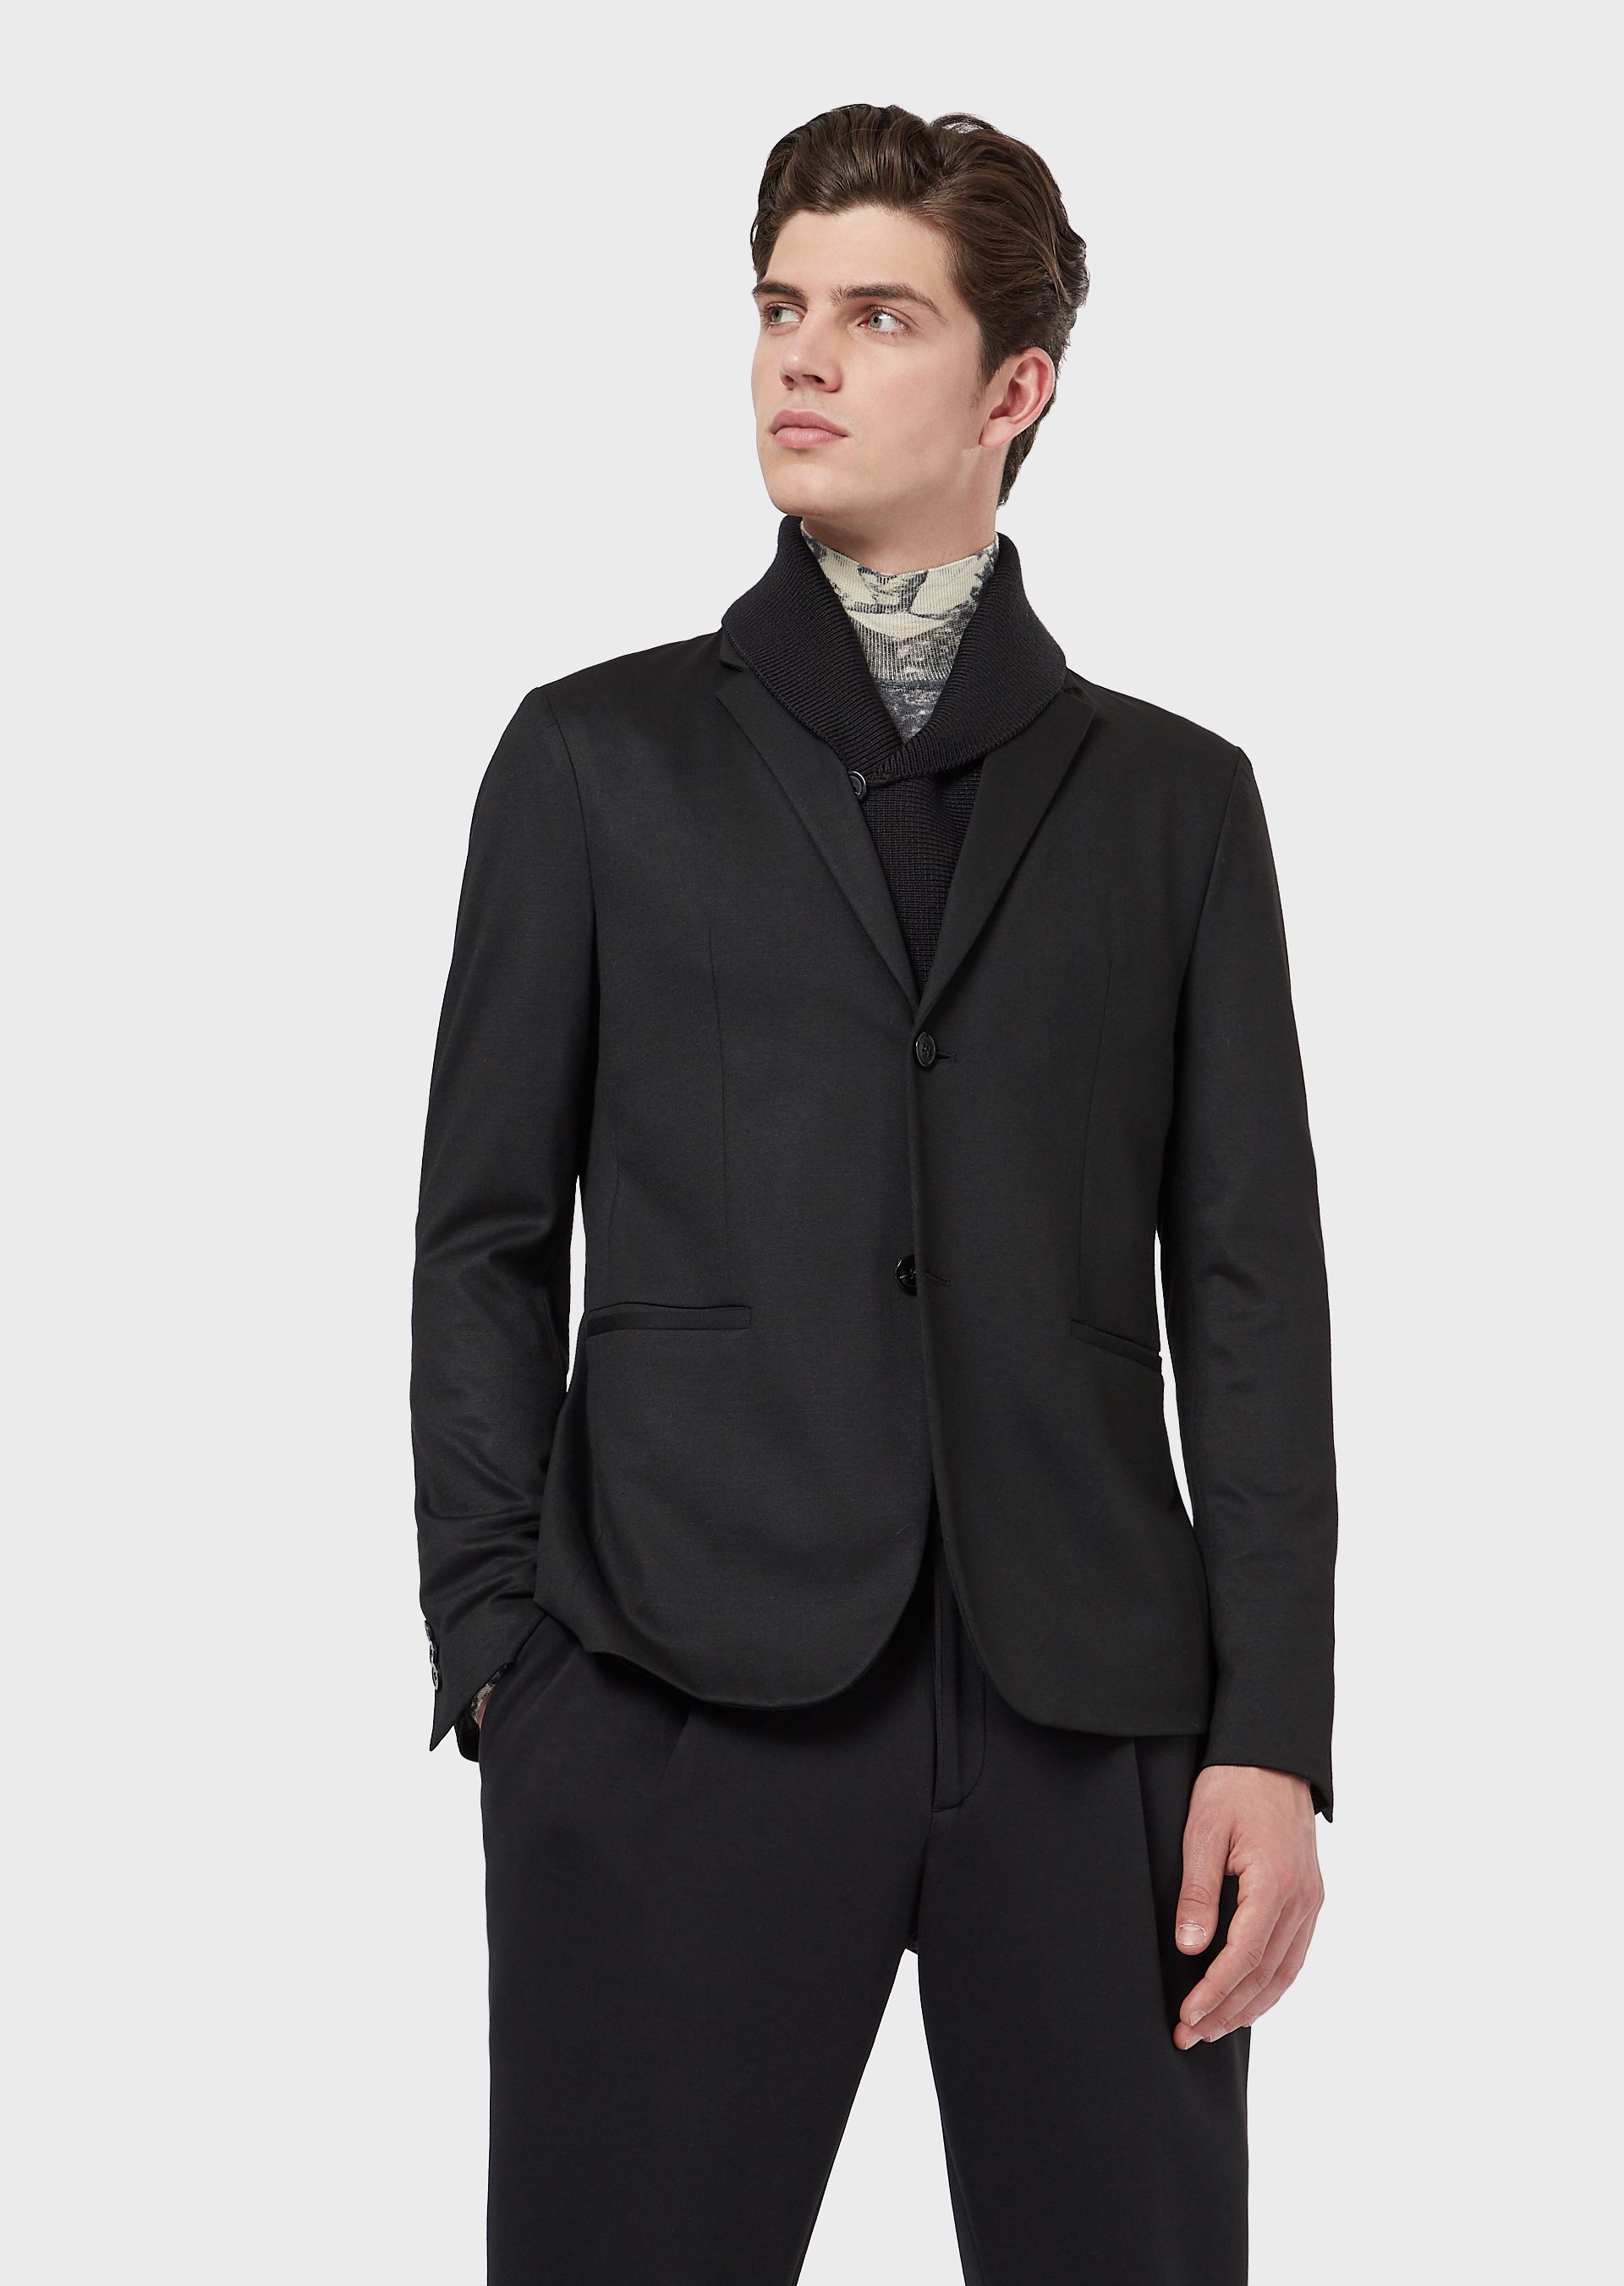 Emporio Armani Formal Jackets - Item 41904552 In Black | ModeSens